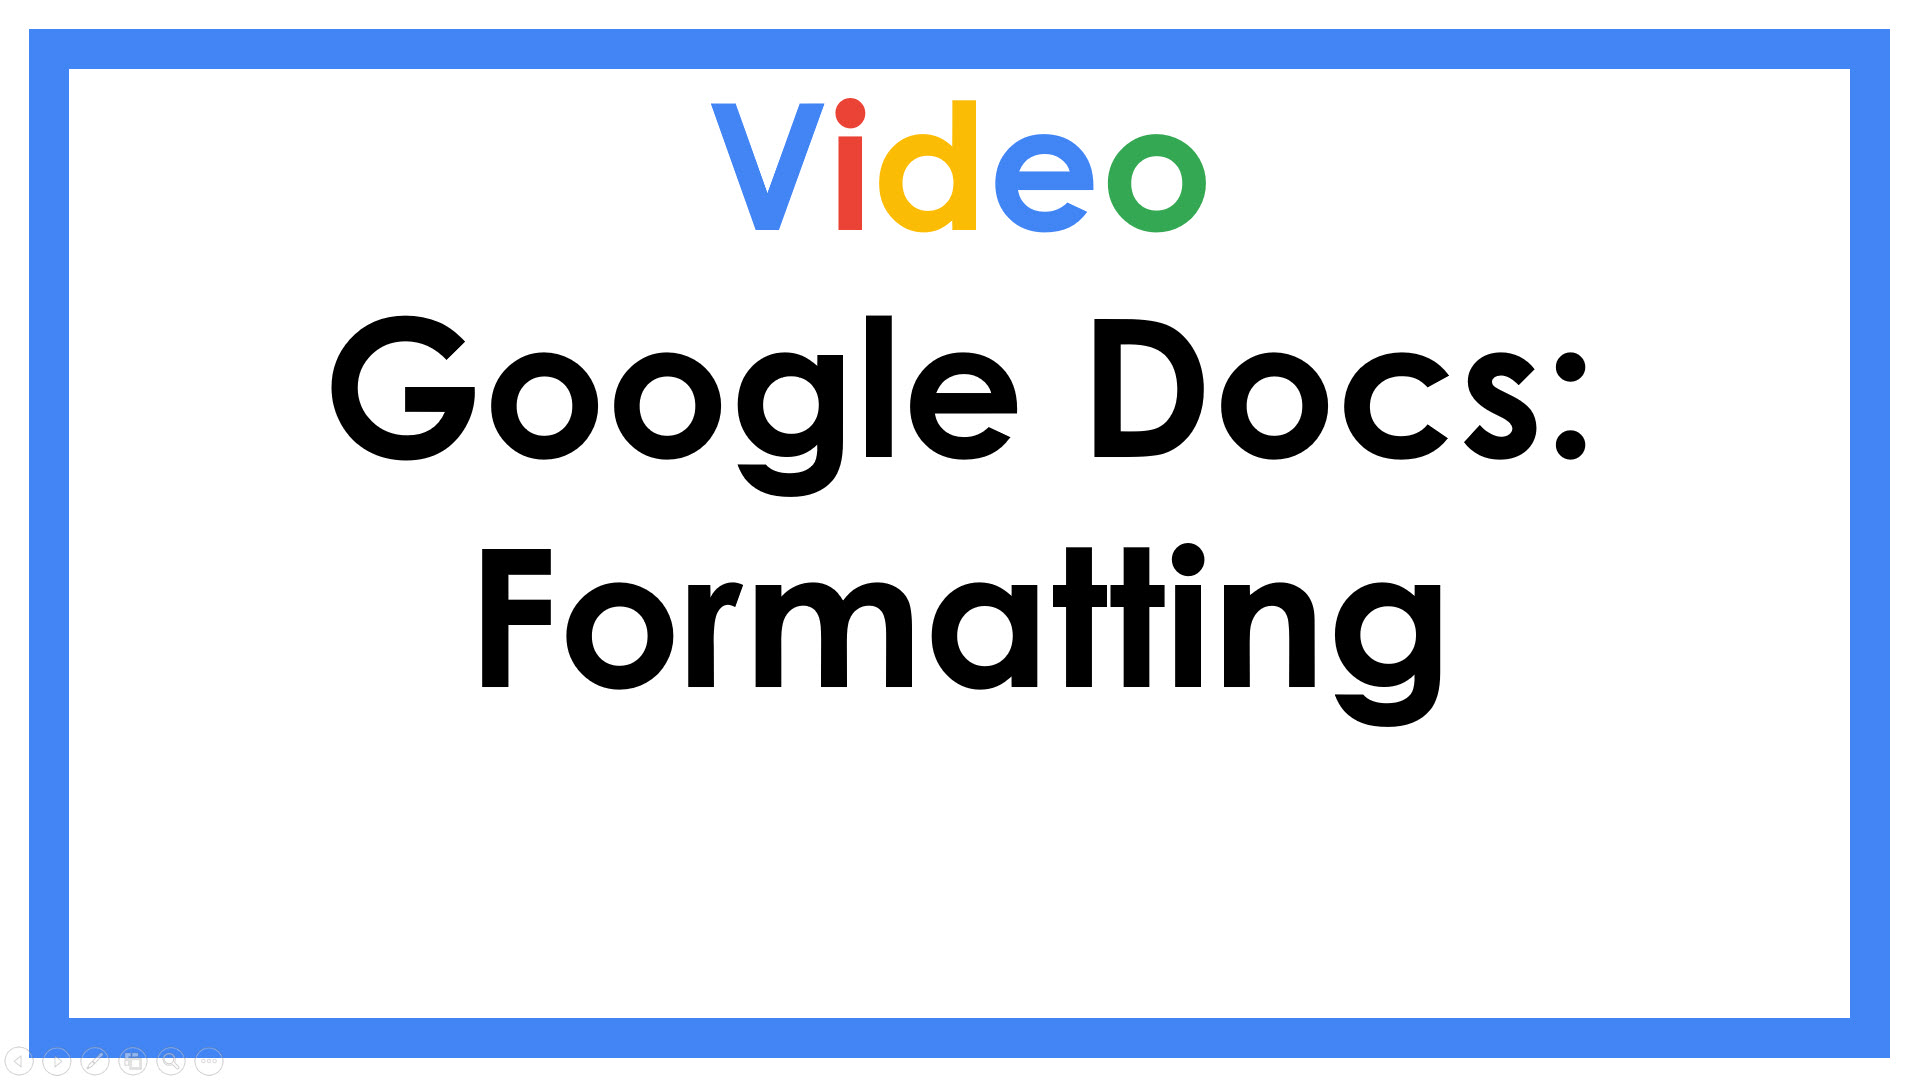 Video Google Docs: Formatting